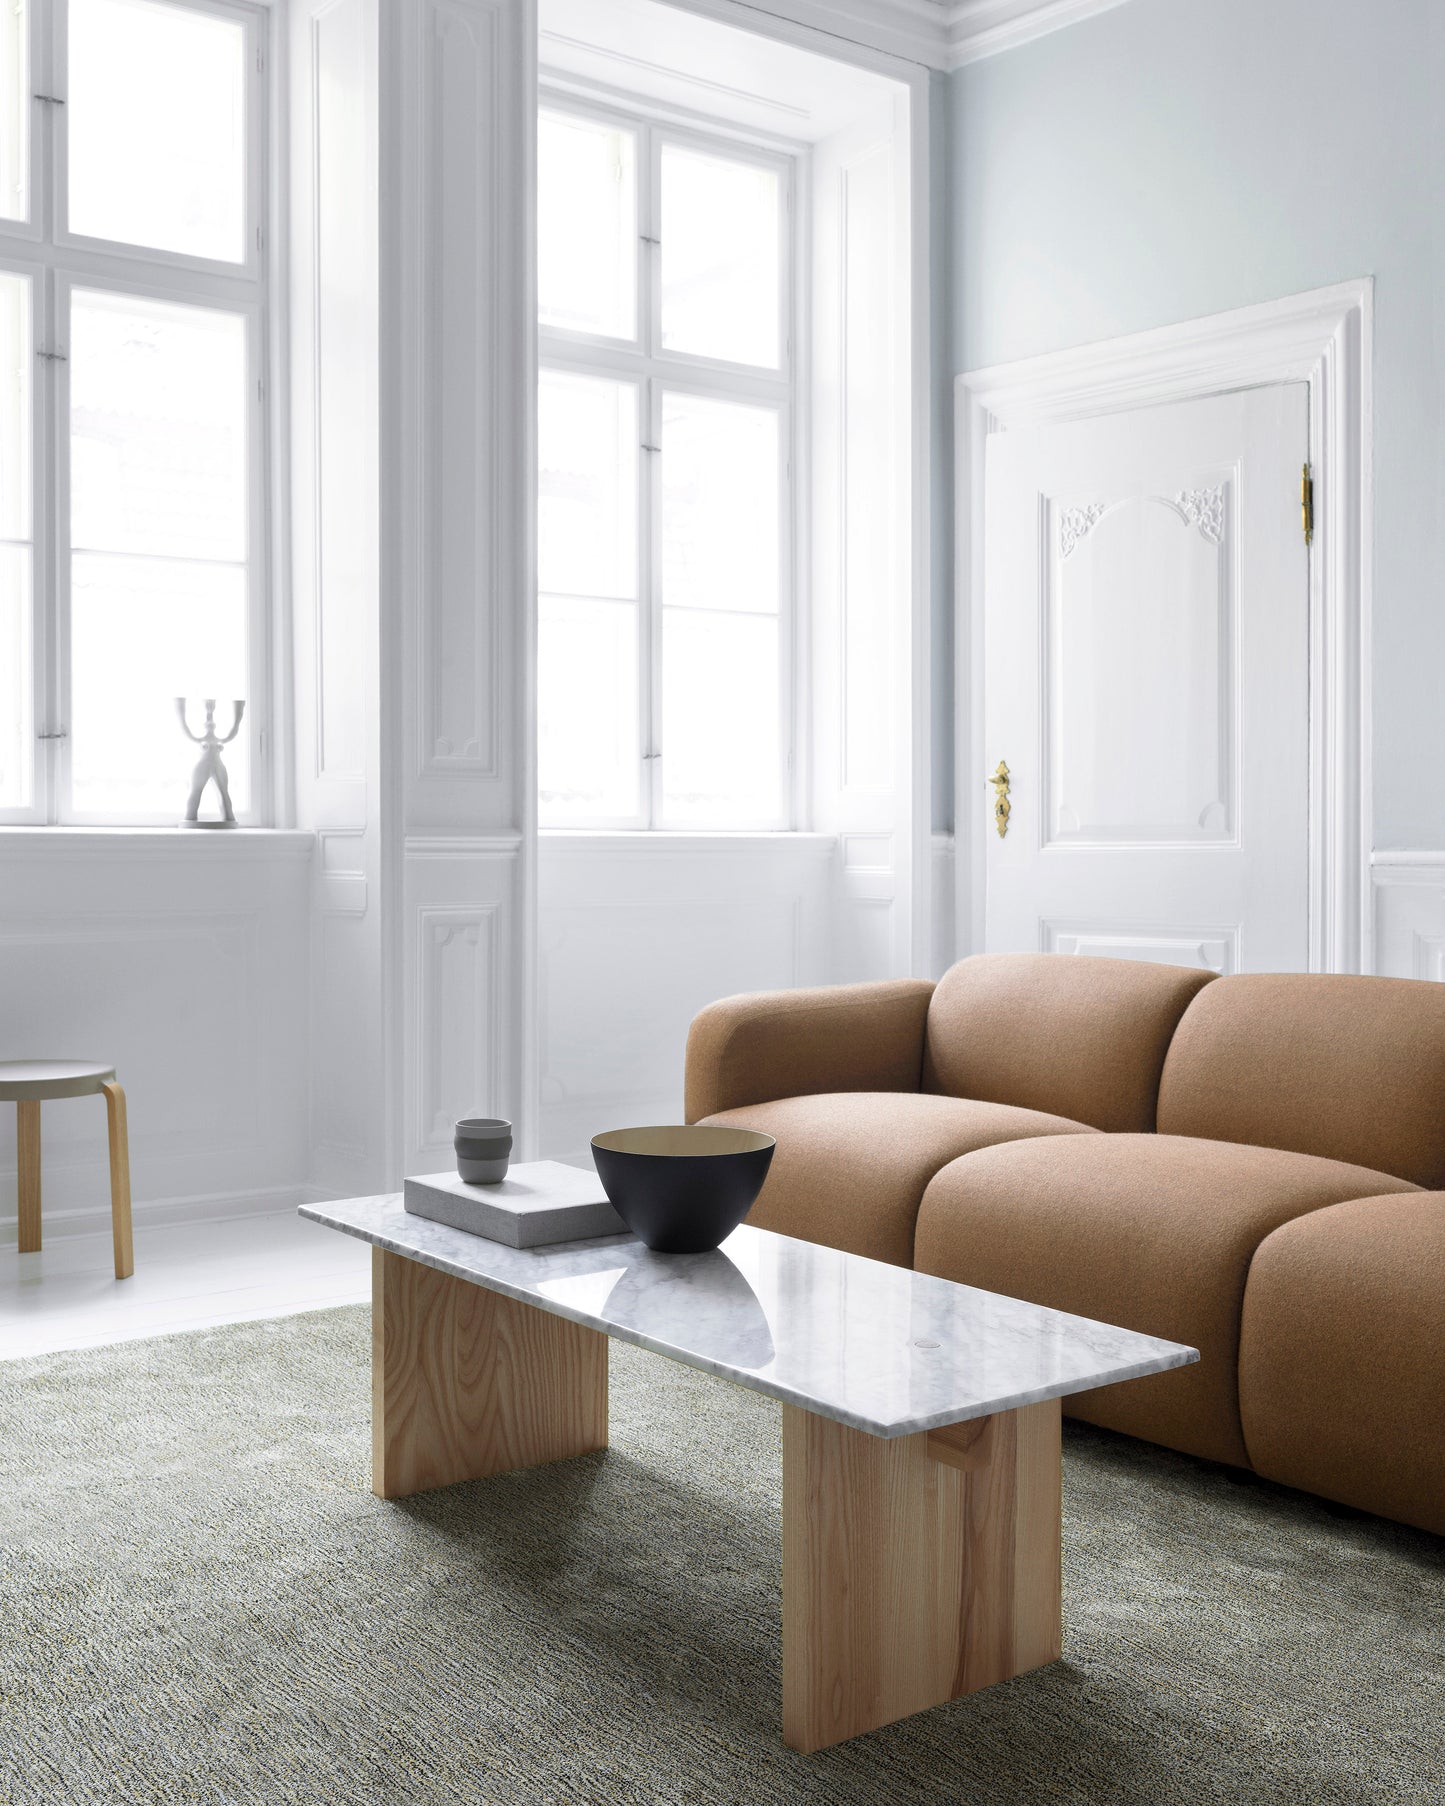 Swell Sofa 3 Seater by Normann Copenhagen